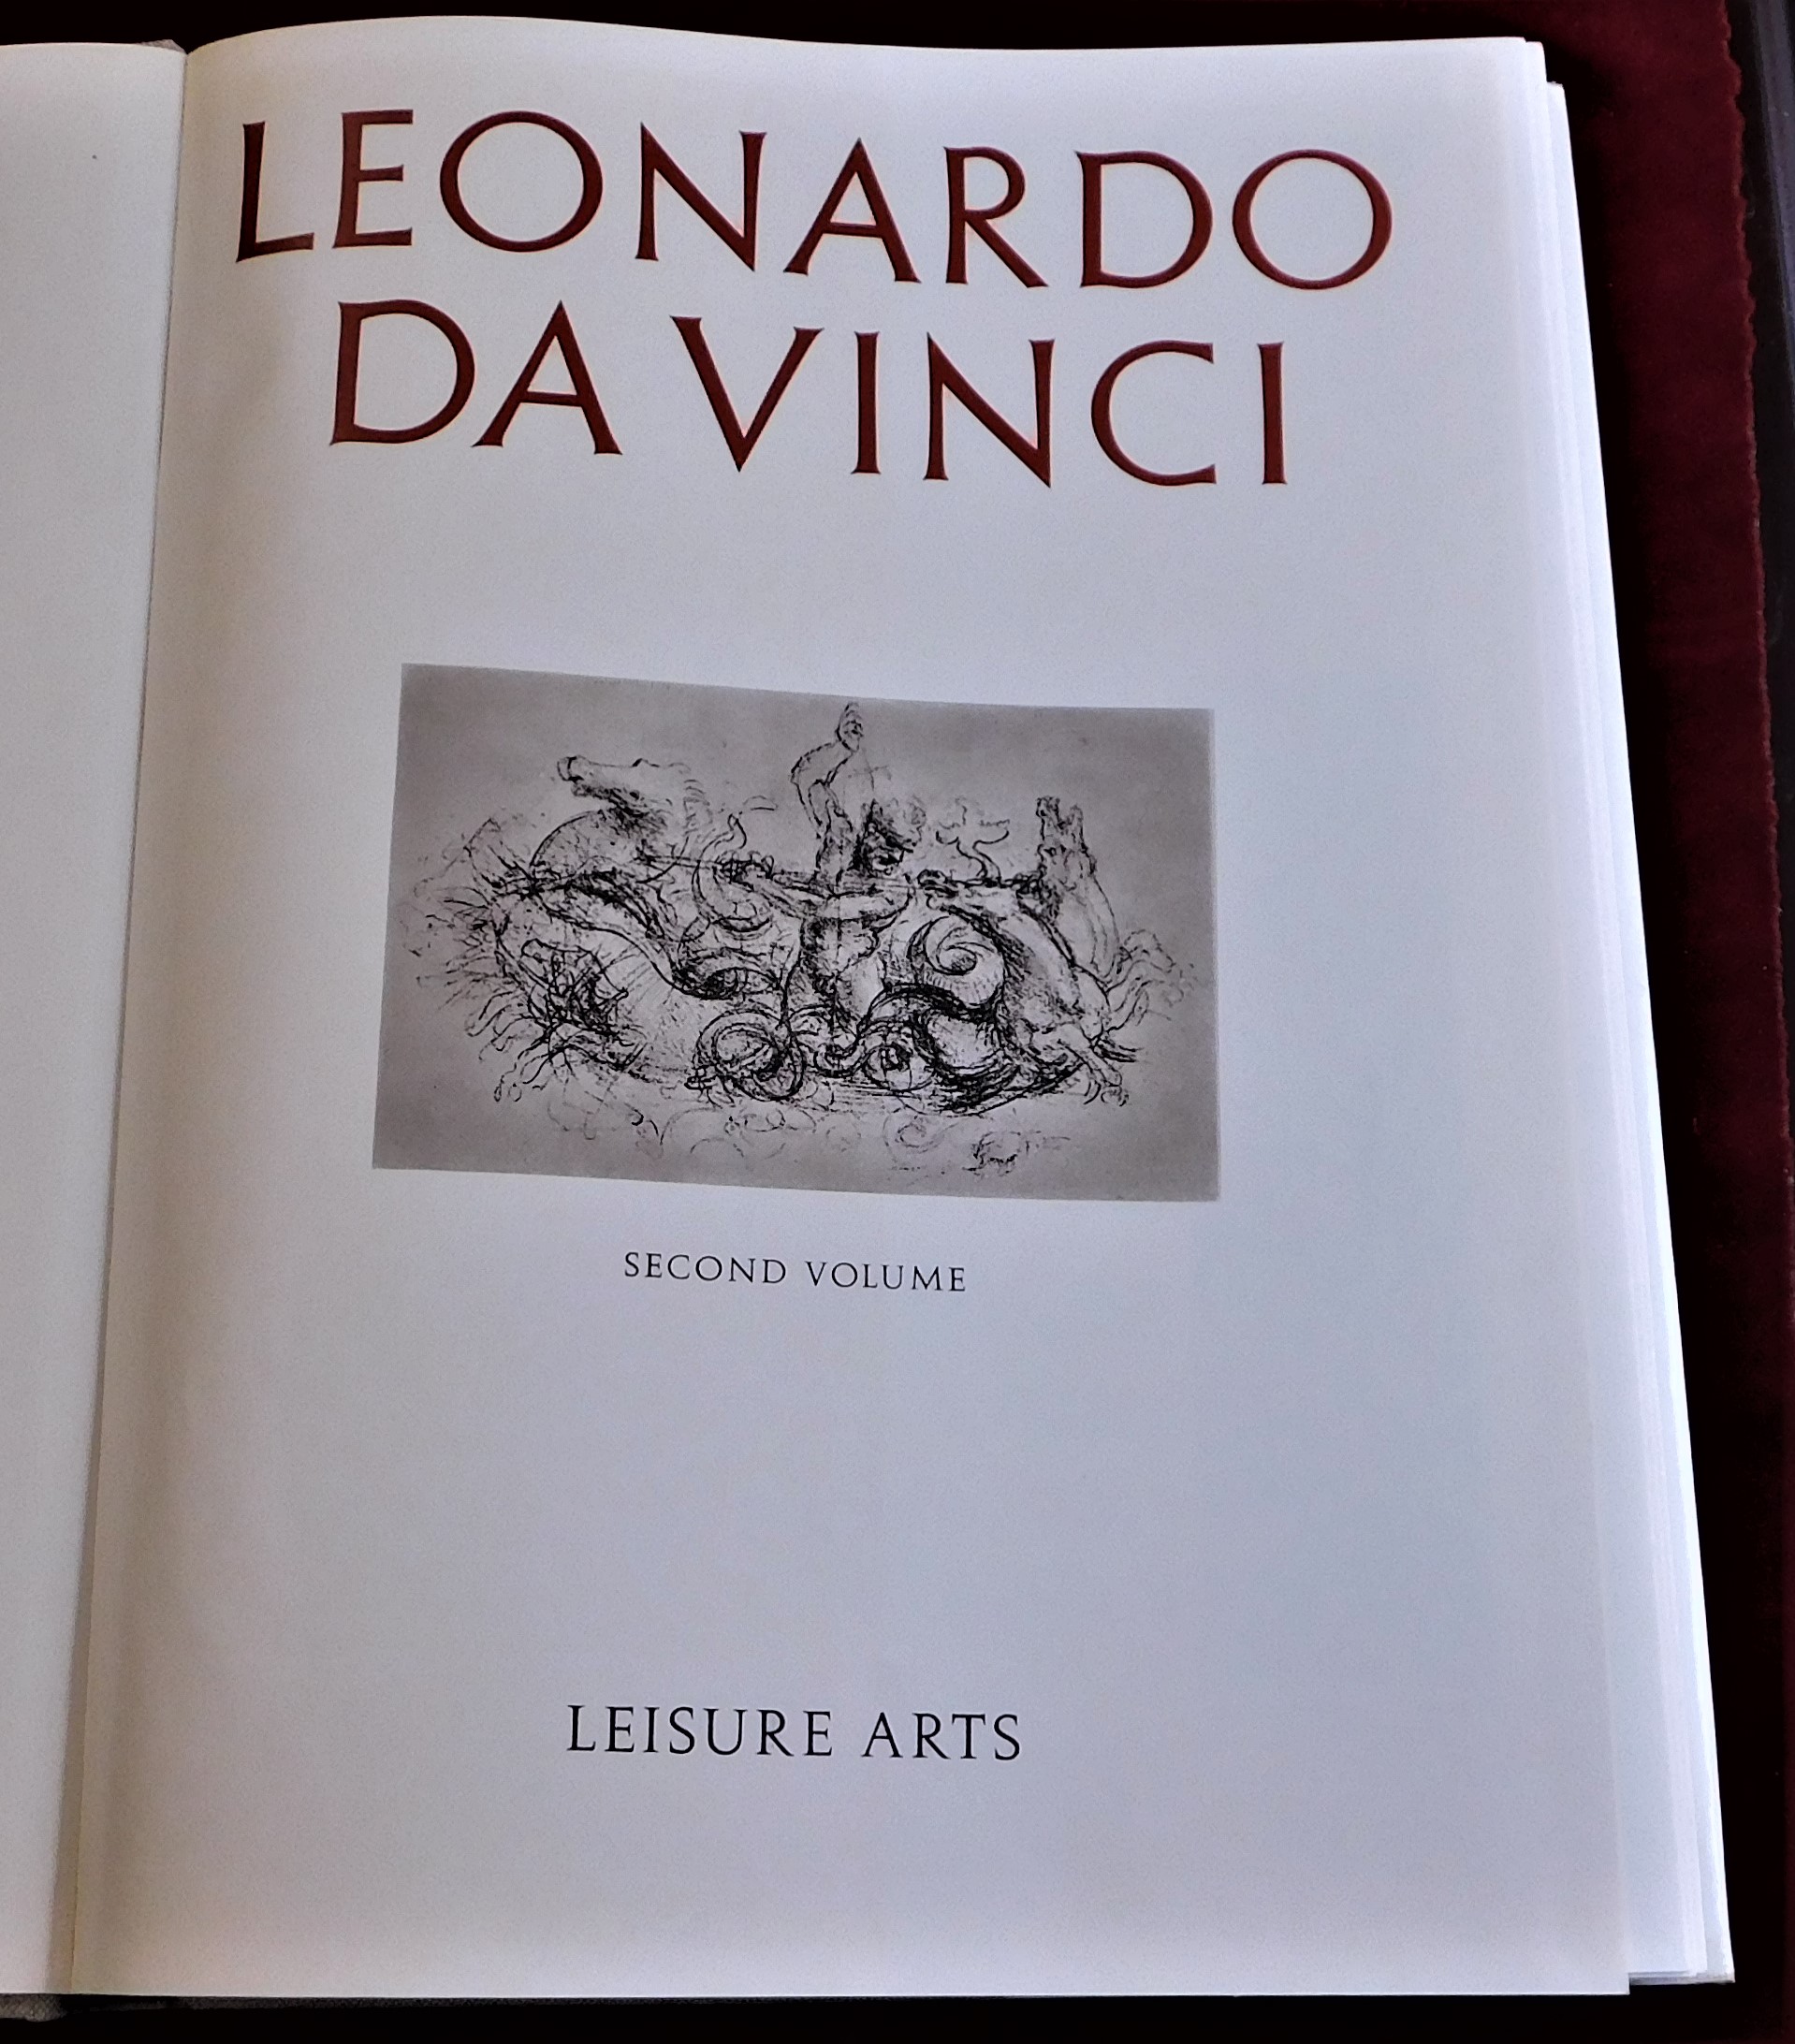 Davinci - Hard back - leisure arts 1964 - 2 volume set in slip case - very good condition - Image 3 of 7